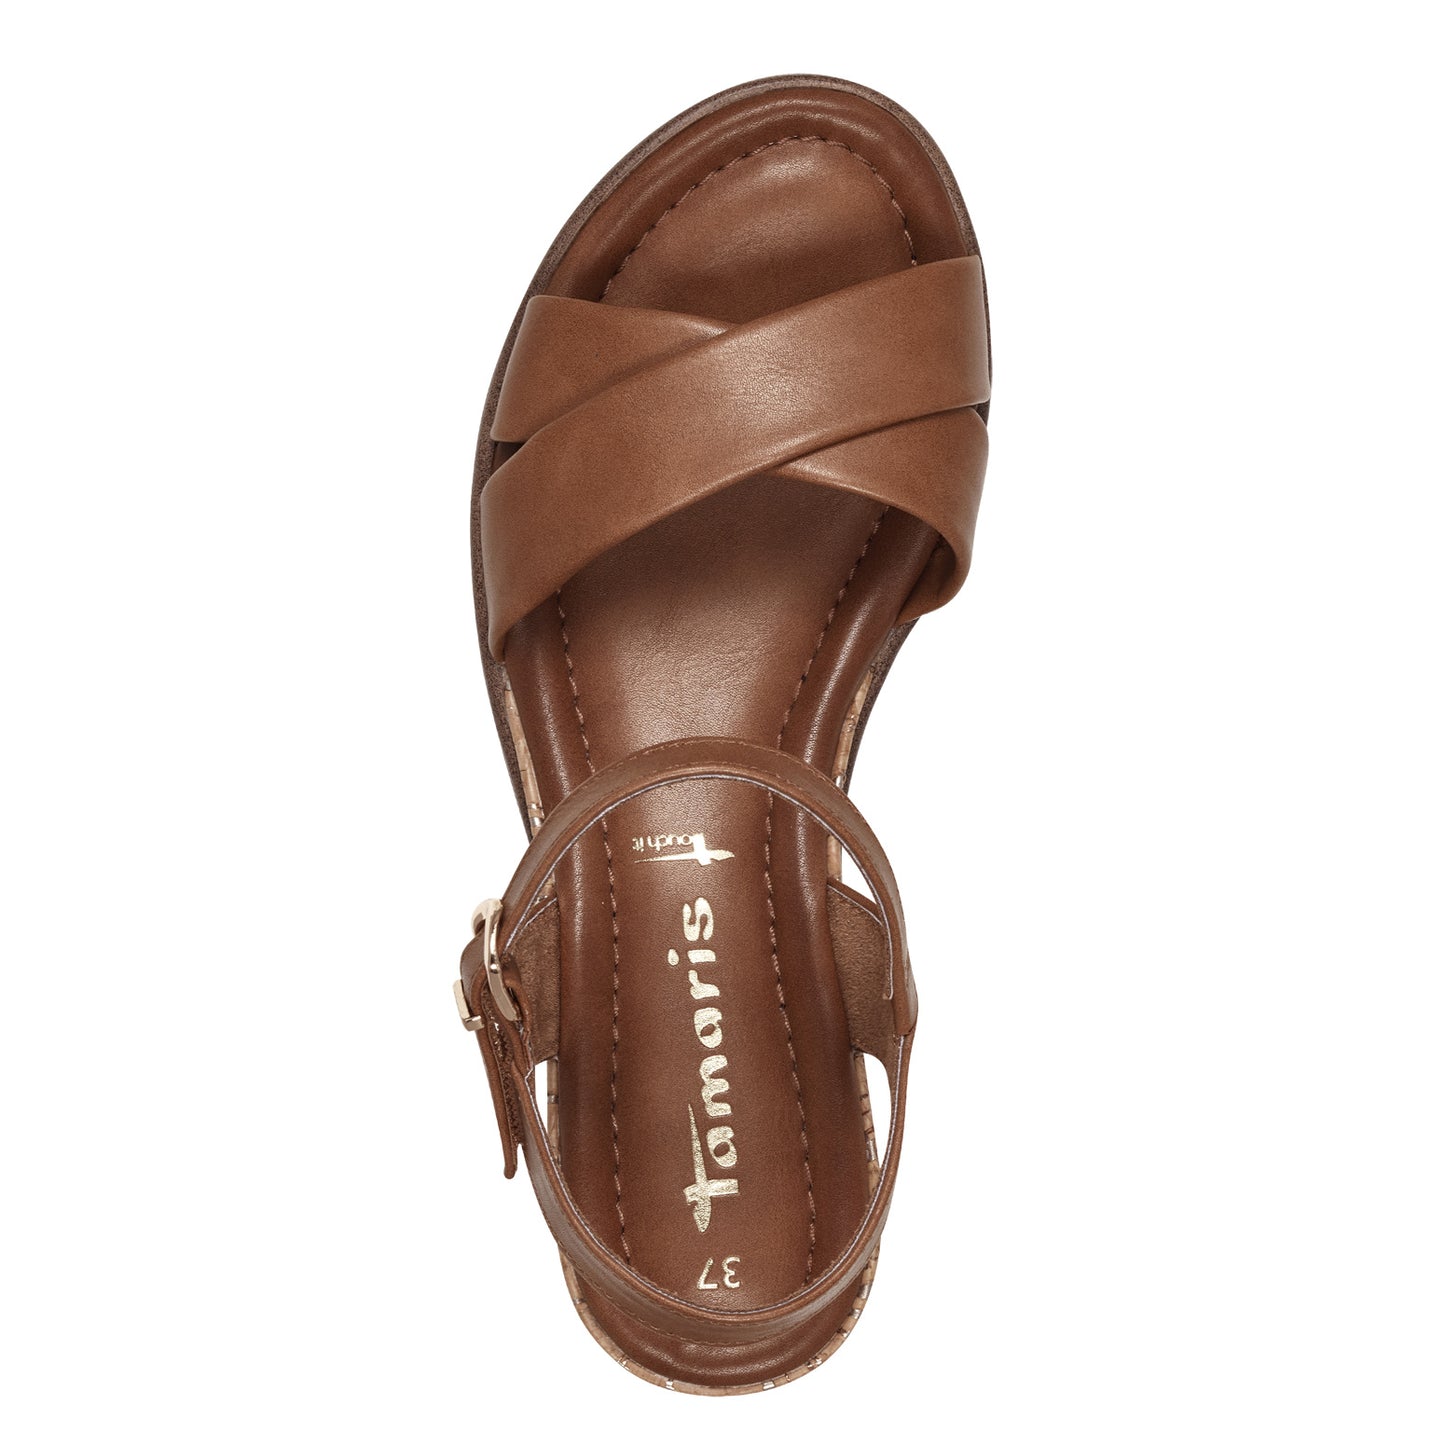 Tamaris - Ladies Shoes Sandals Cognac (2152)